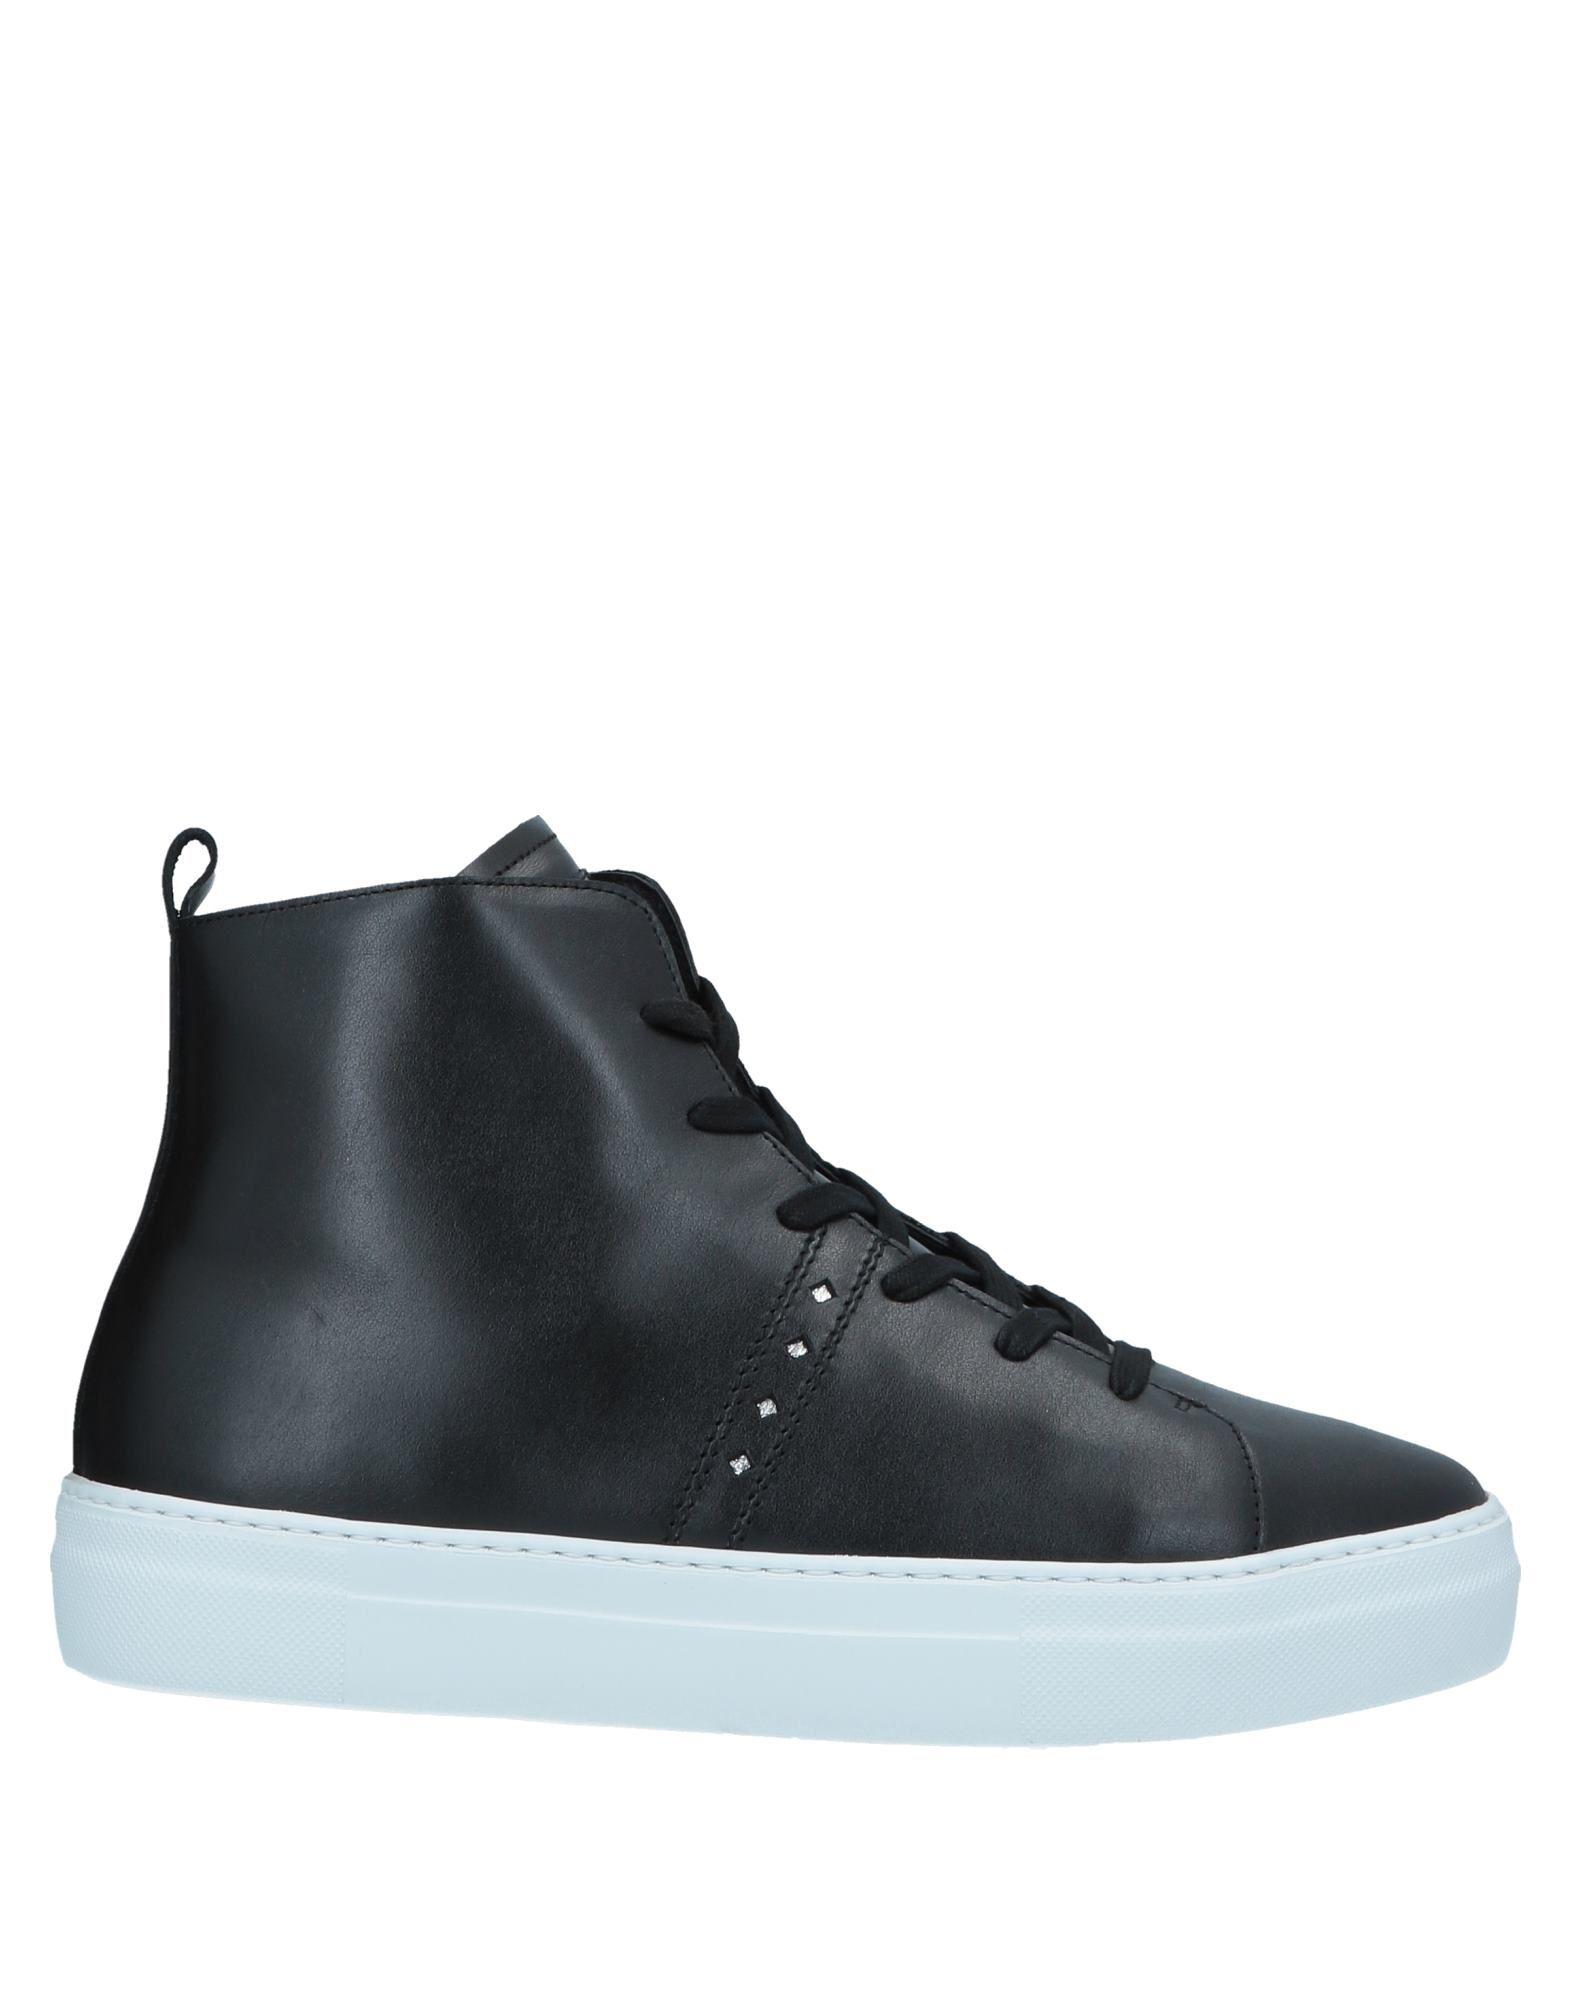 Just Cavalli High-tops & Sneakers in Black for Men - Lyst